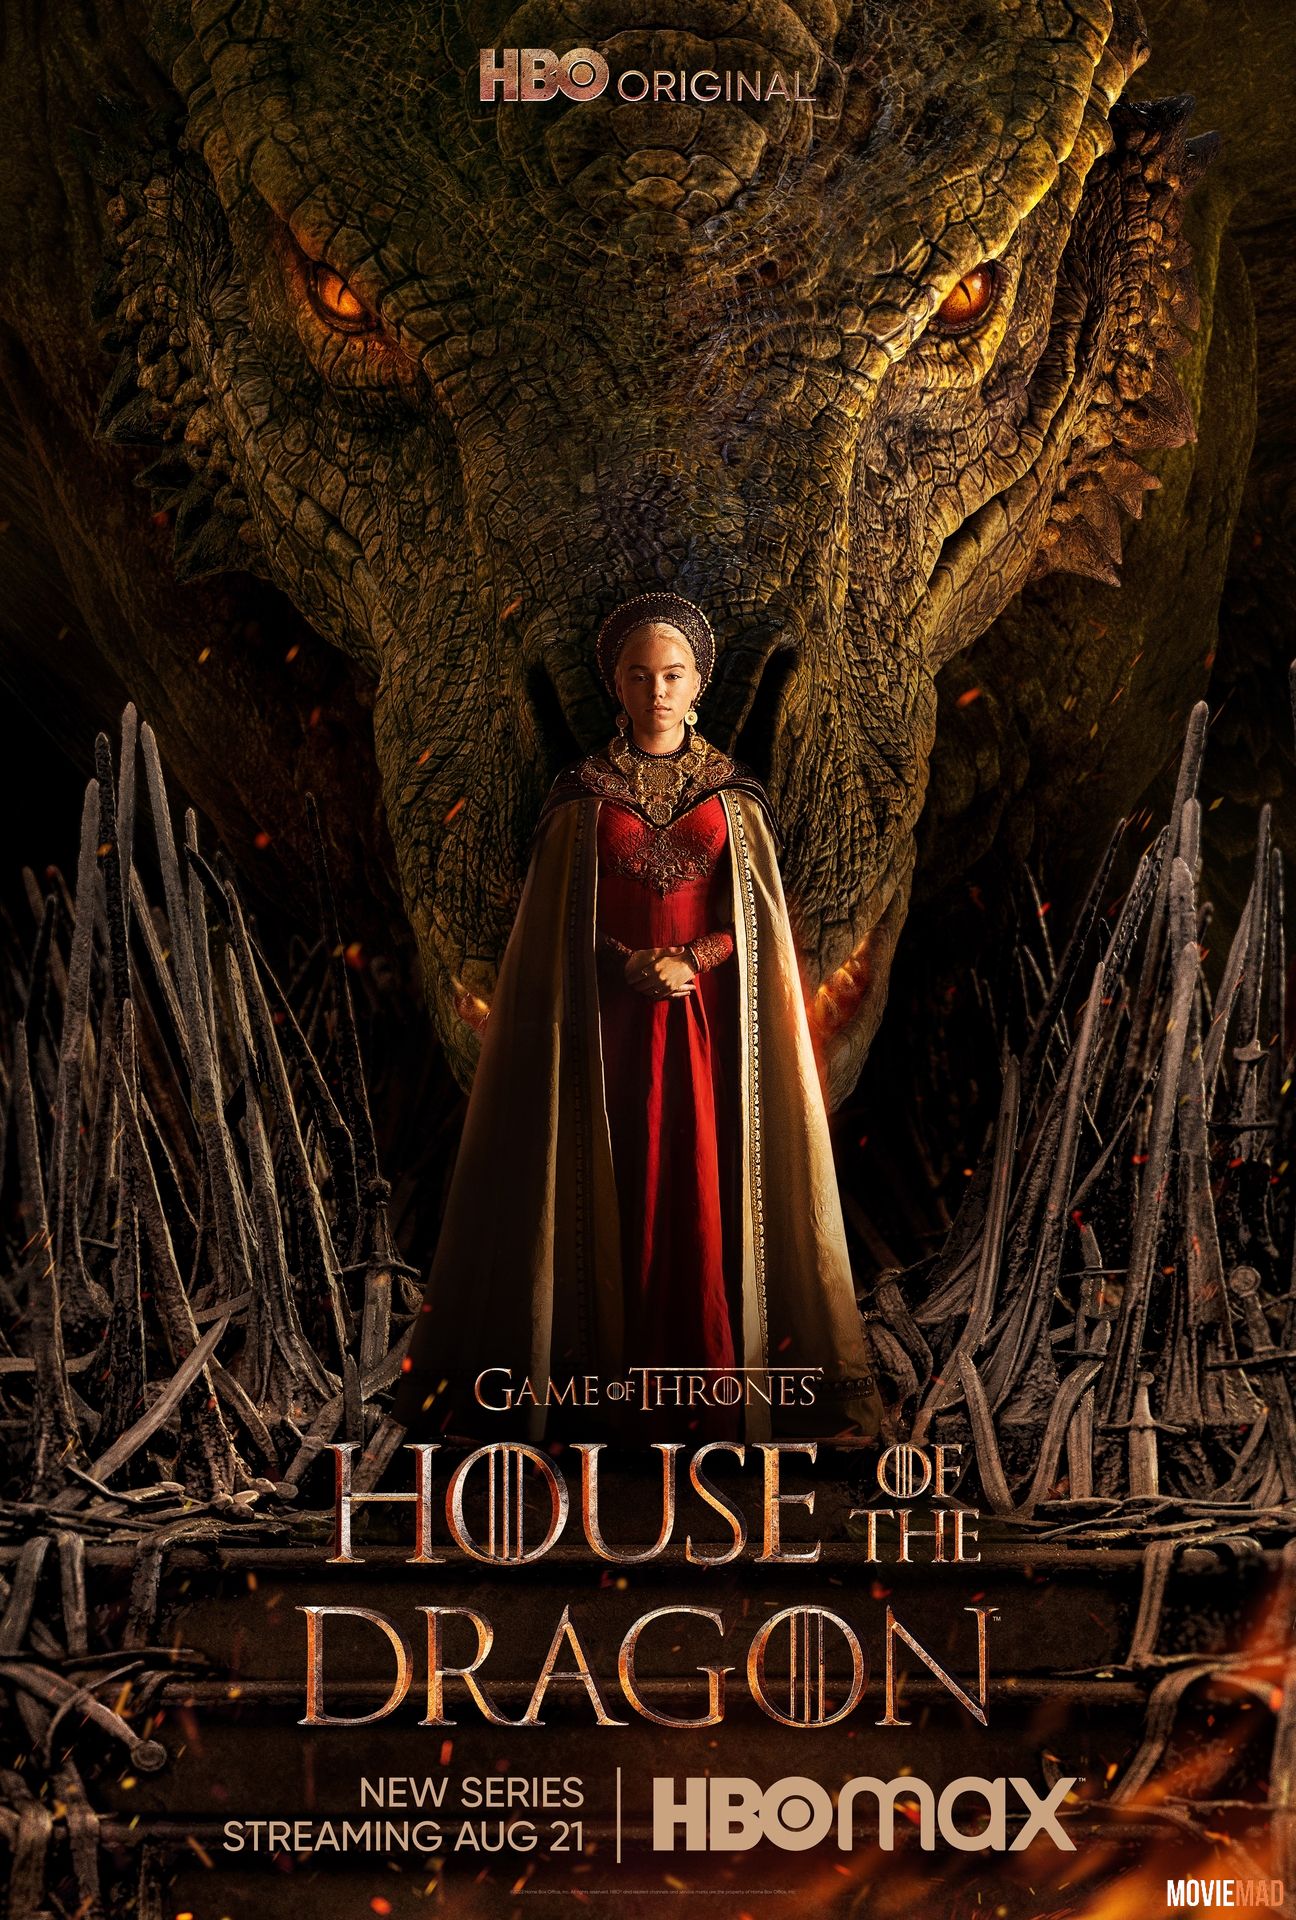 House Of The Dragon S01E01 (2022) English HBOMAX HDRip 720p 480p